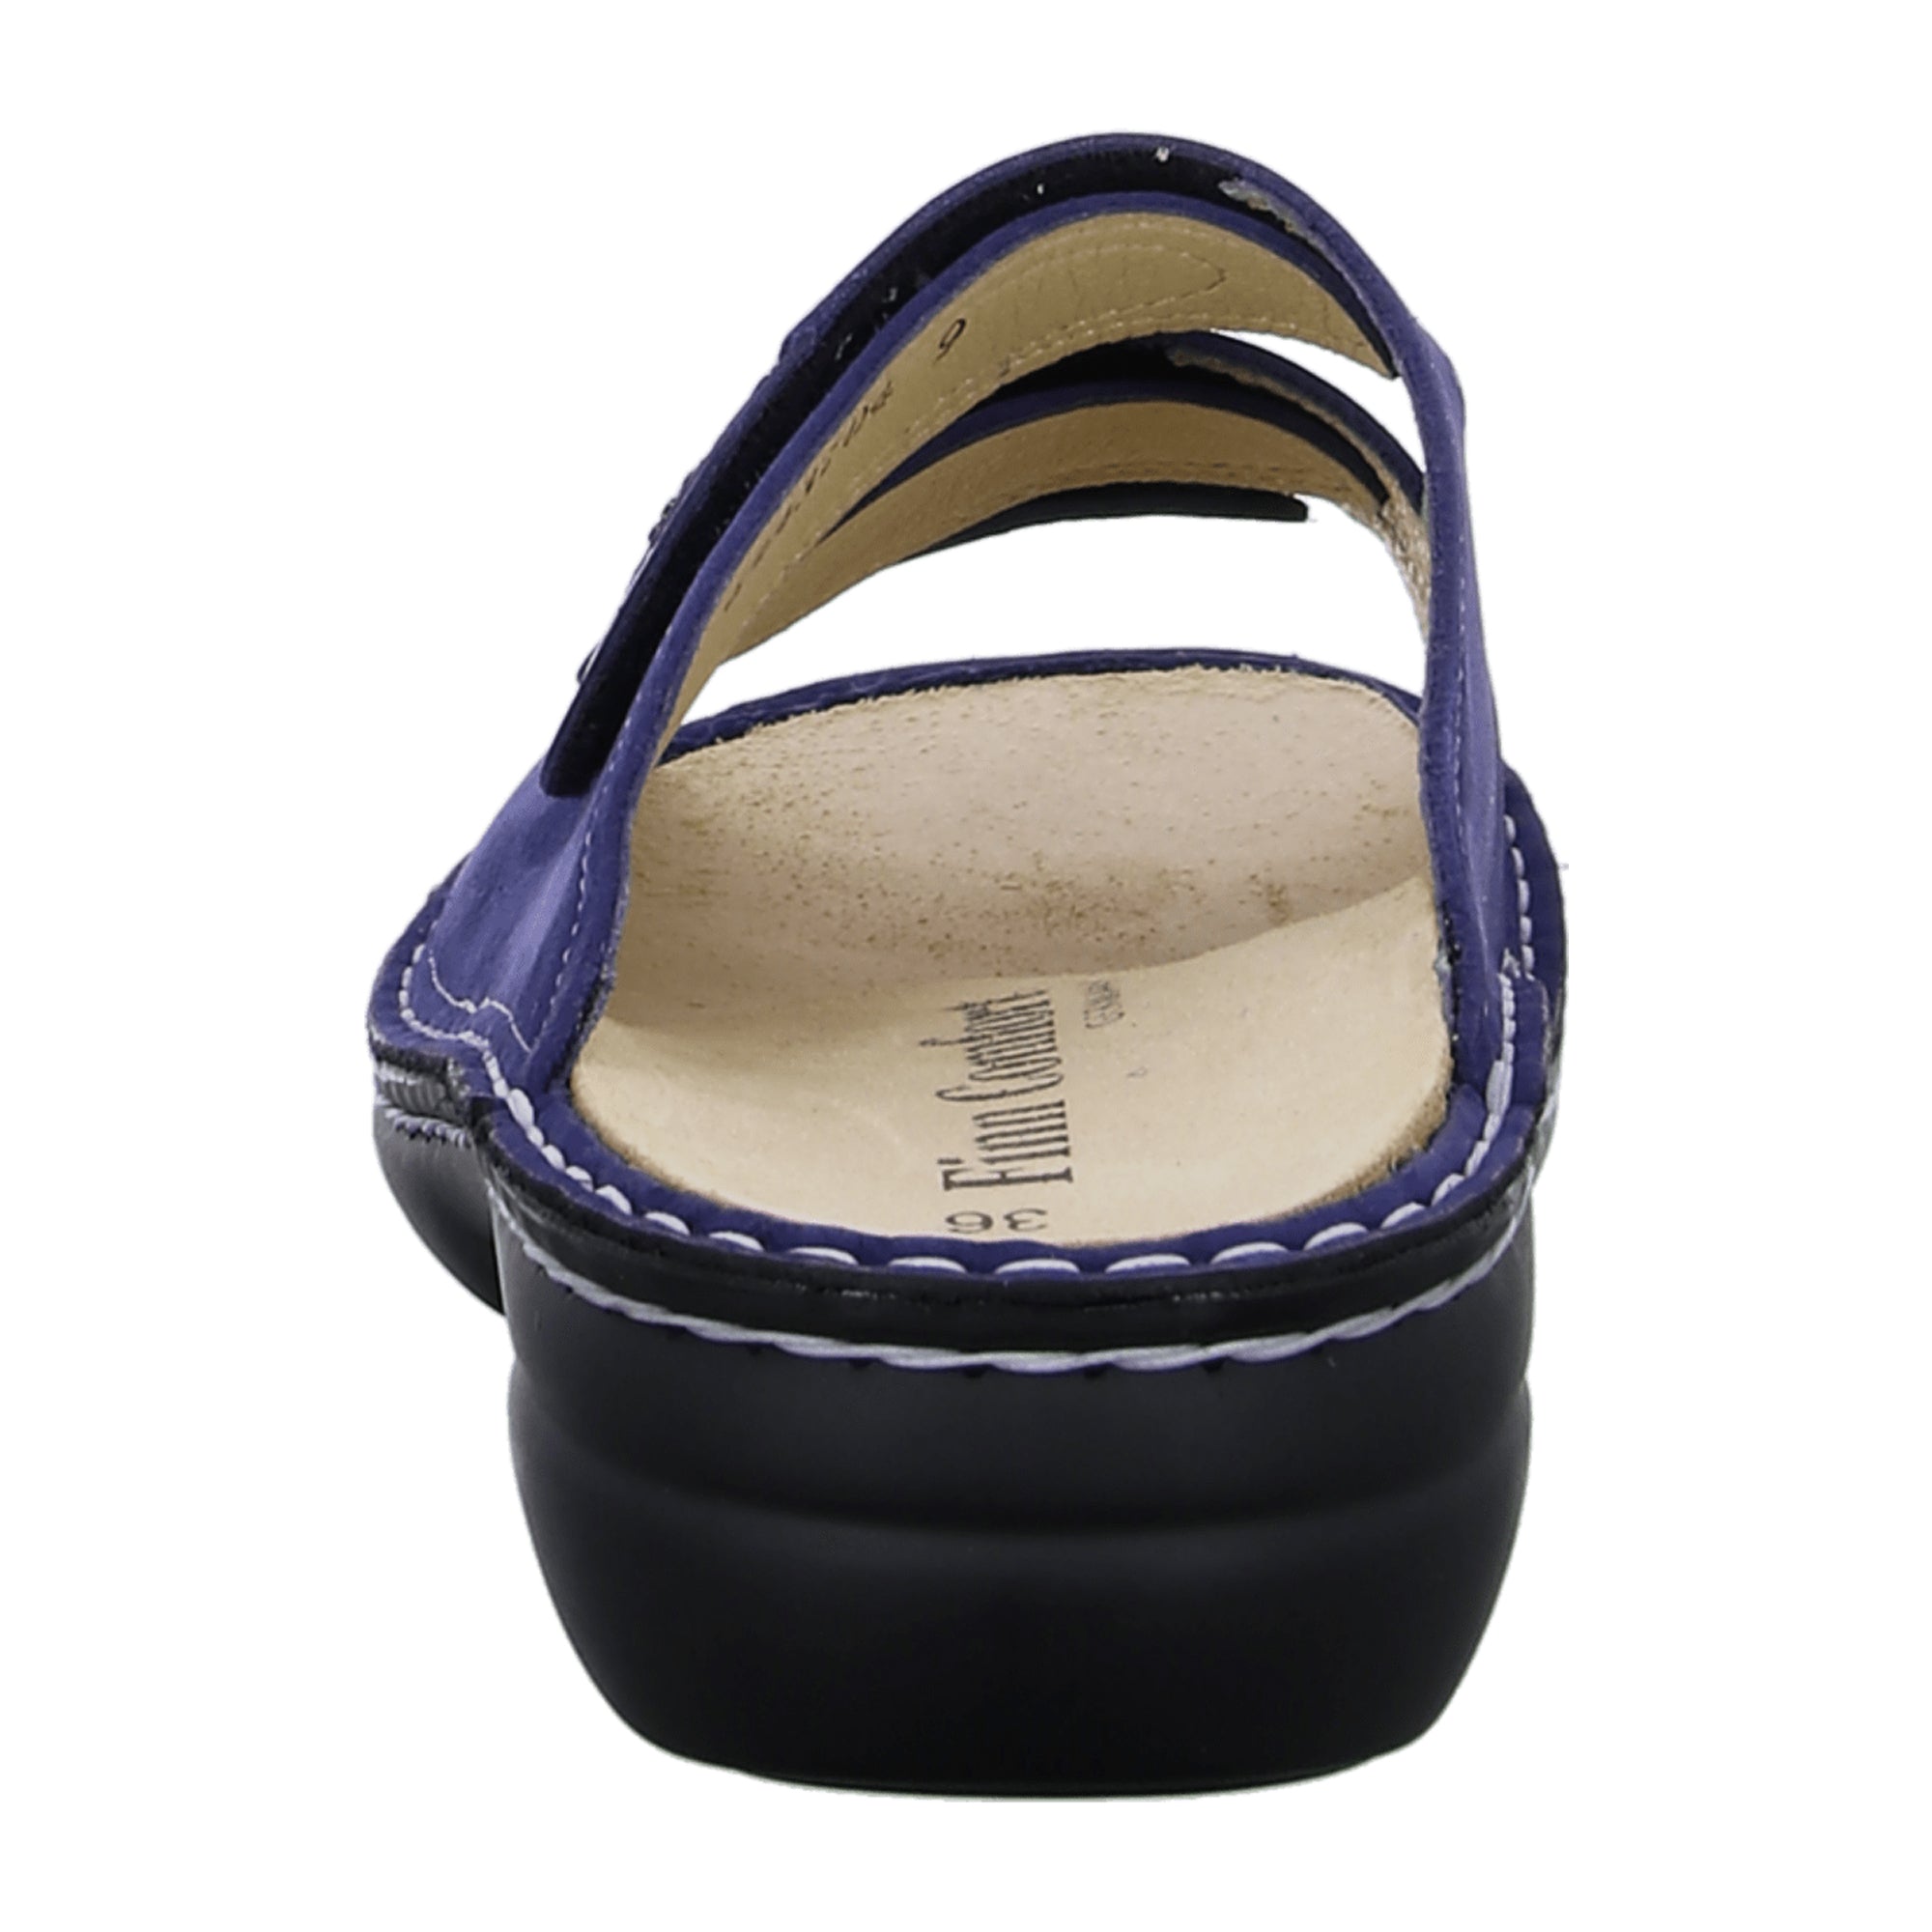 Finn Comfort Kos Women's Slide Sandals in Royal/Atlantic Blue - Stylish & Comfortable Leather Footwear